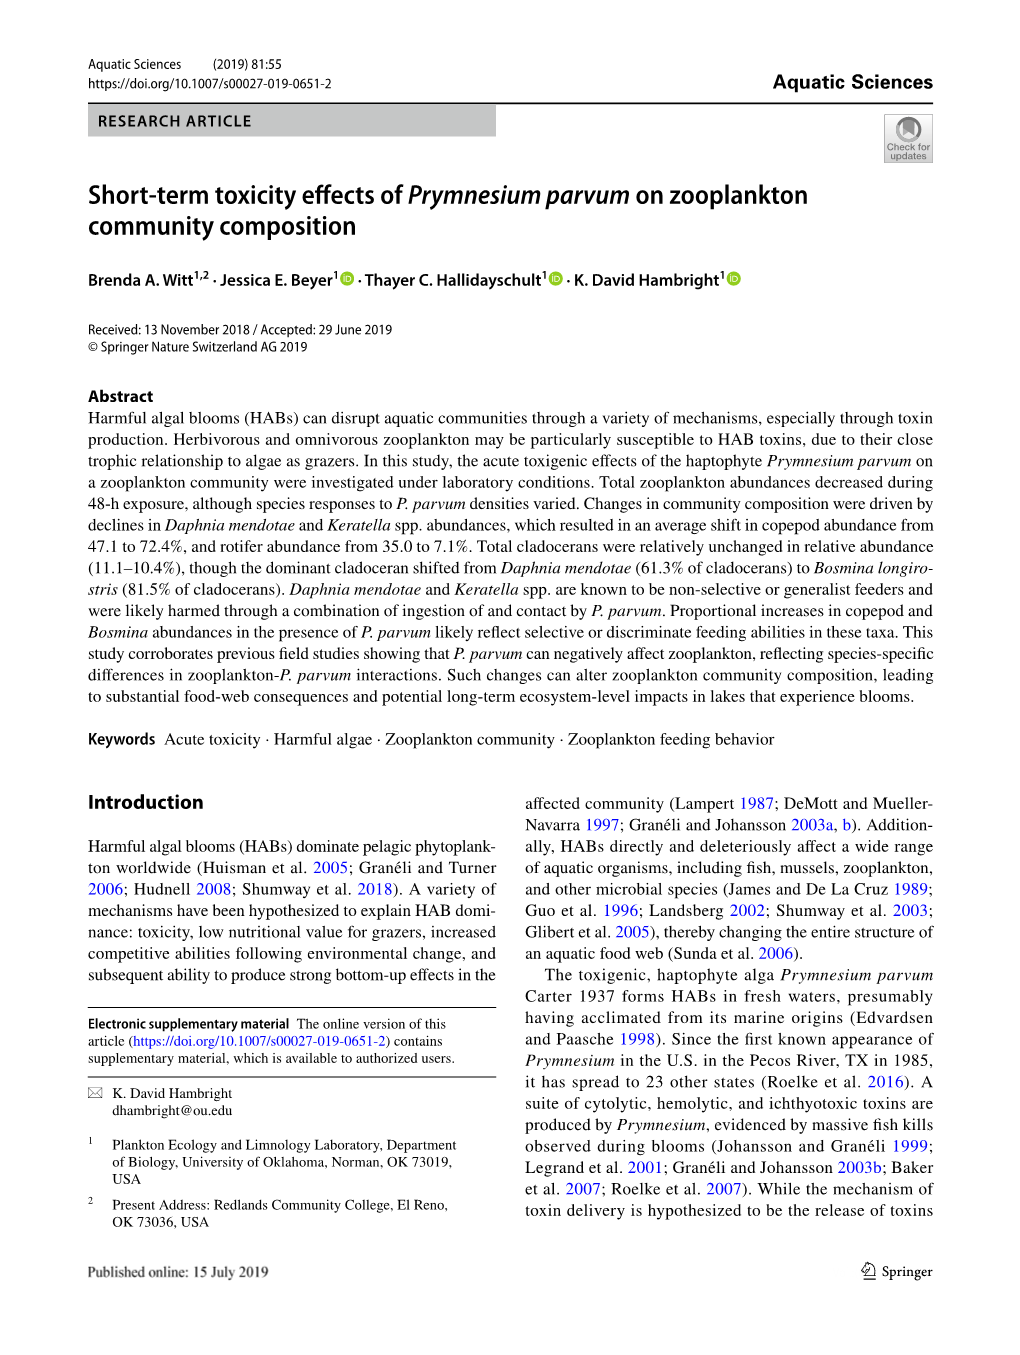 Short-Term Toxicity Effects of Prymnesium Parvum on Zooplankton Community Composition; Aquatic Sciences; Witt Et Al.; University of Oklahoma; Dhambright@Ou.Edu